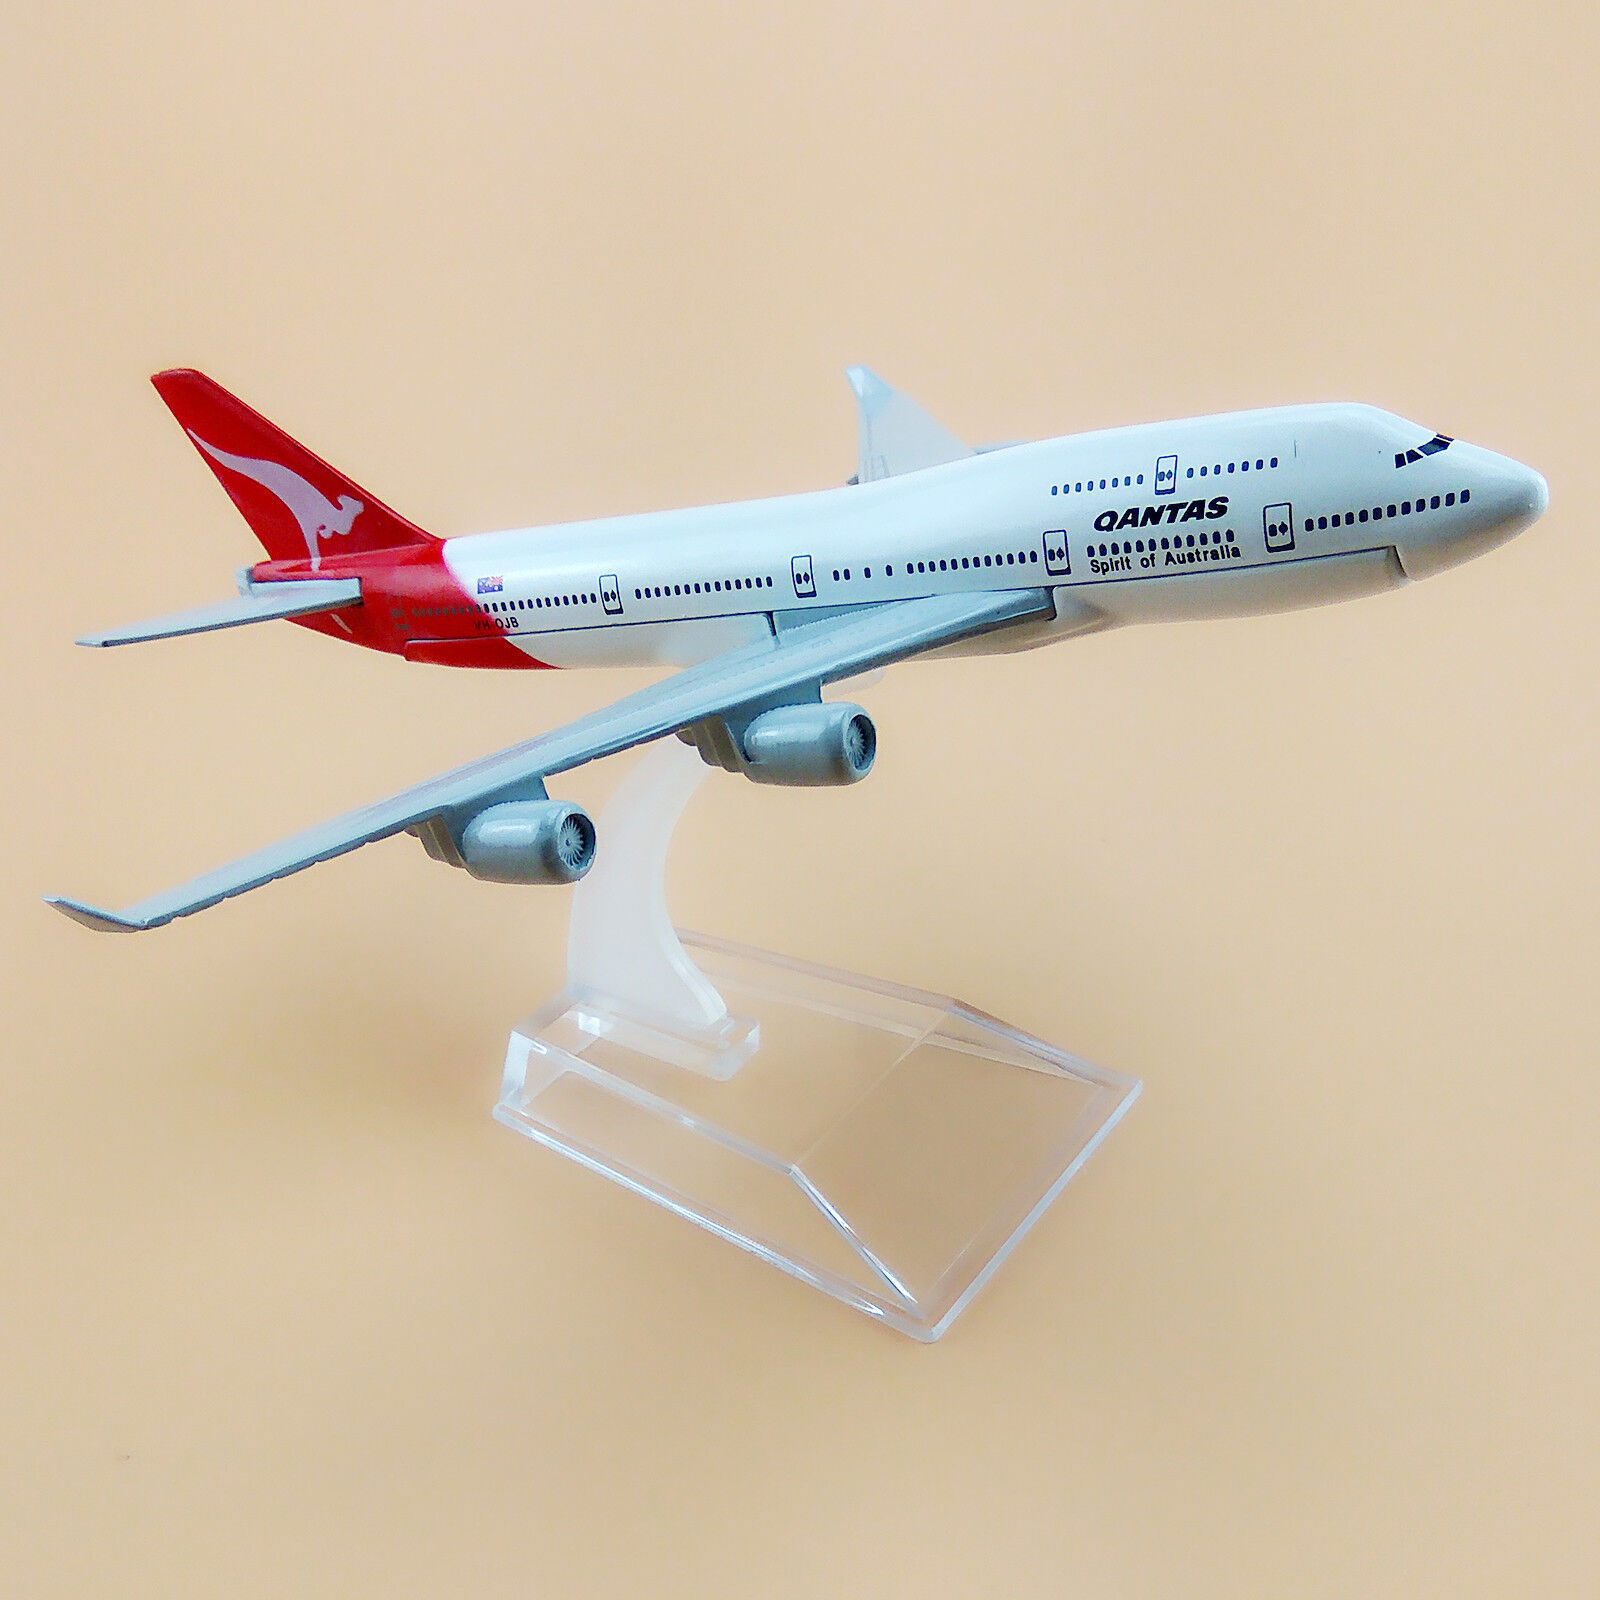 16cm Qantas Airlines Boeing B747-400 Airplane Model Plane Air Aircraft Model